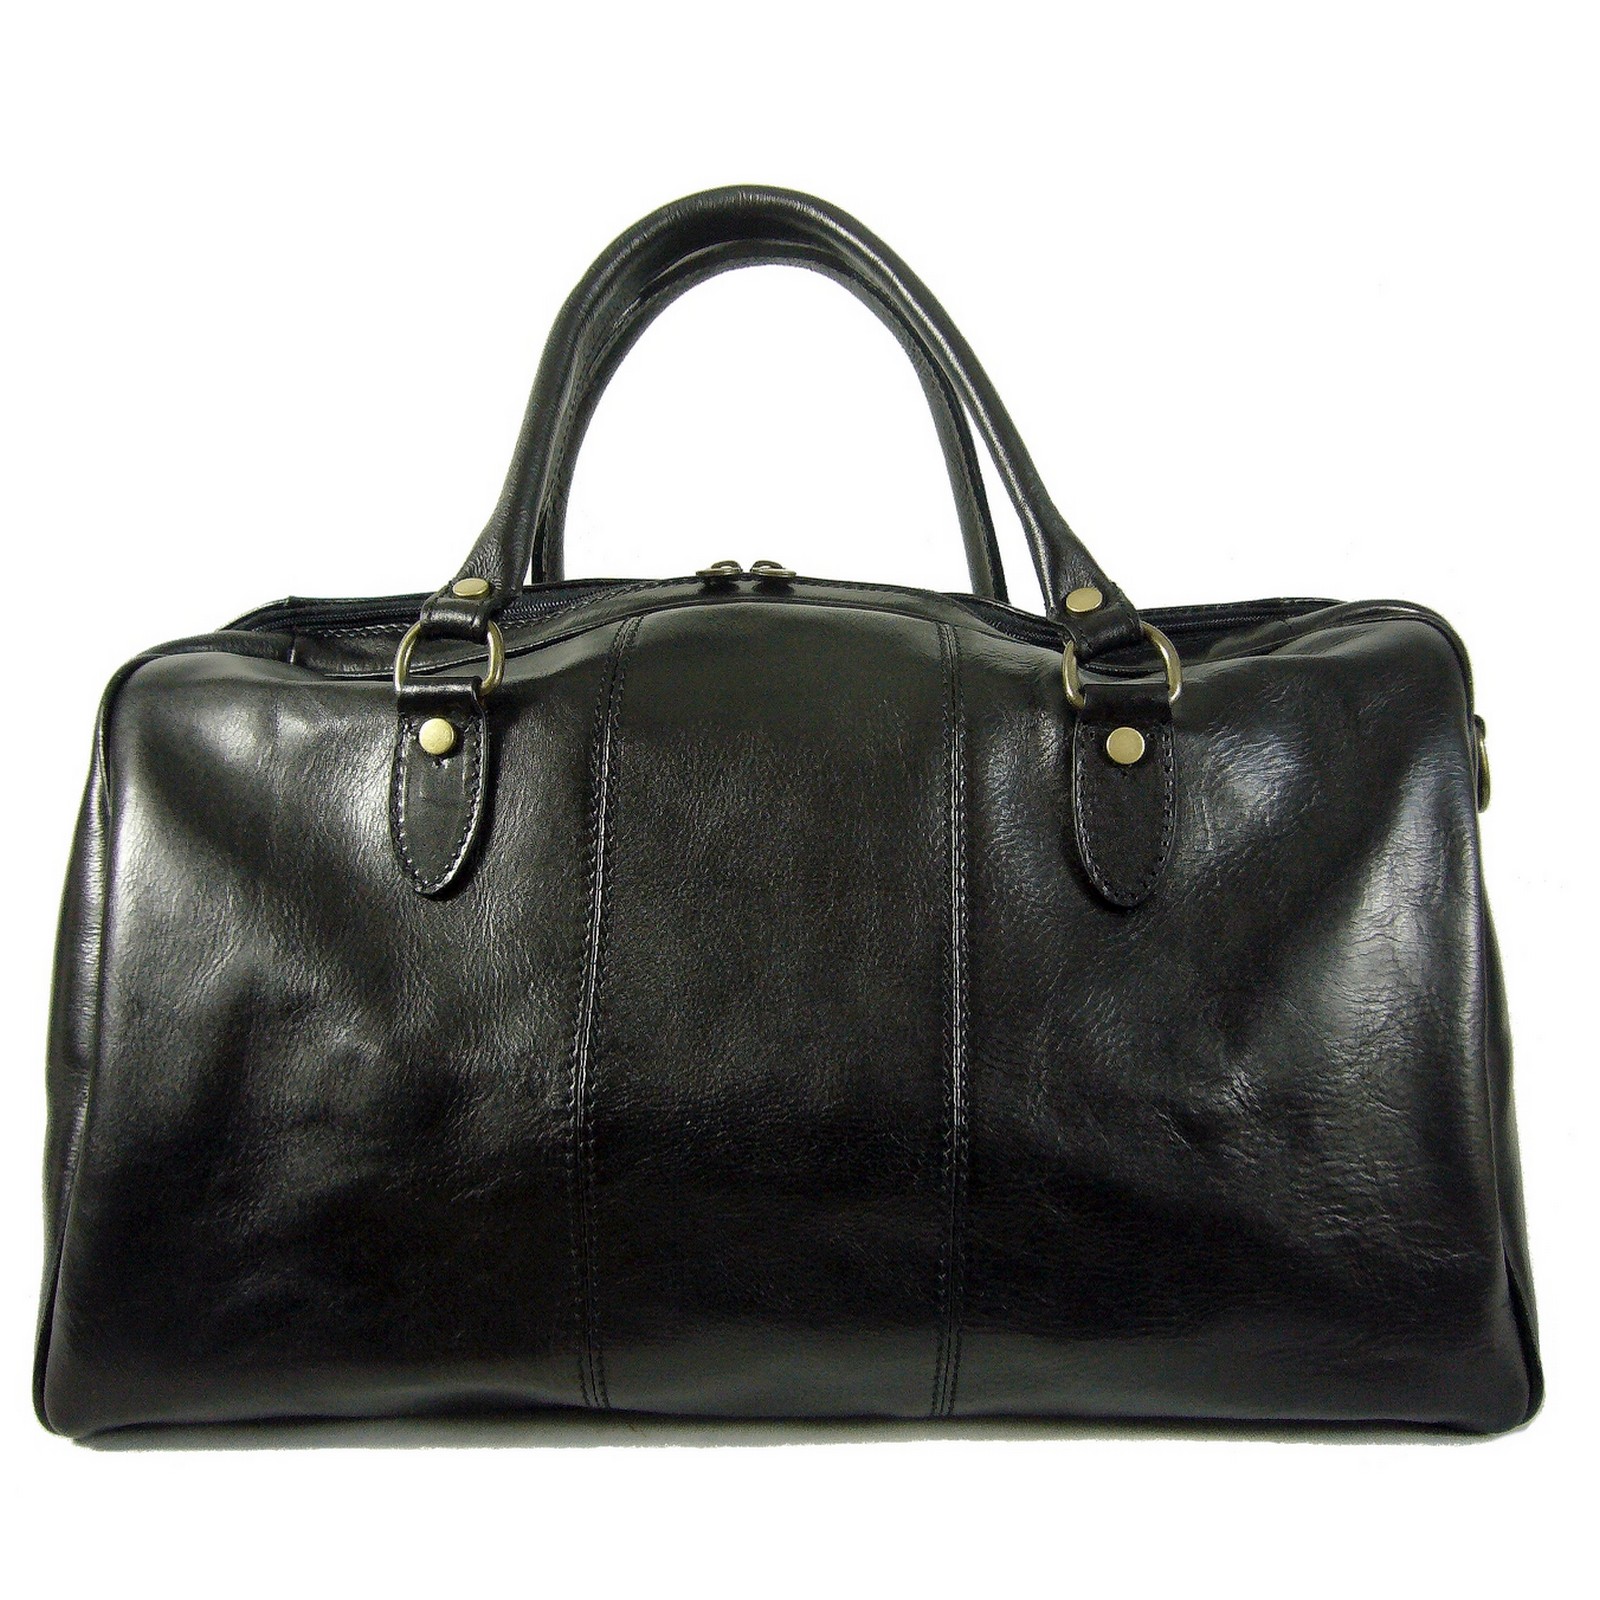 Sac de voyage sac bagage cuir sac bagage a main en cuir homme femme sac de  sport sac sport sac voyage bagage à main en cuir noir -  France